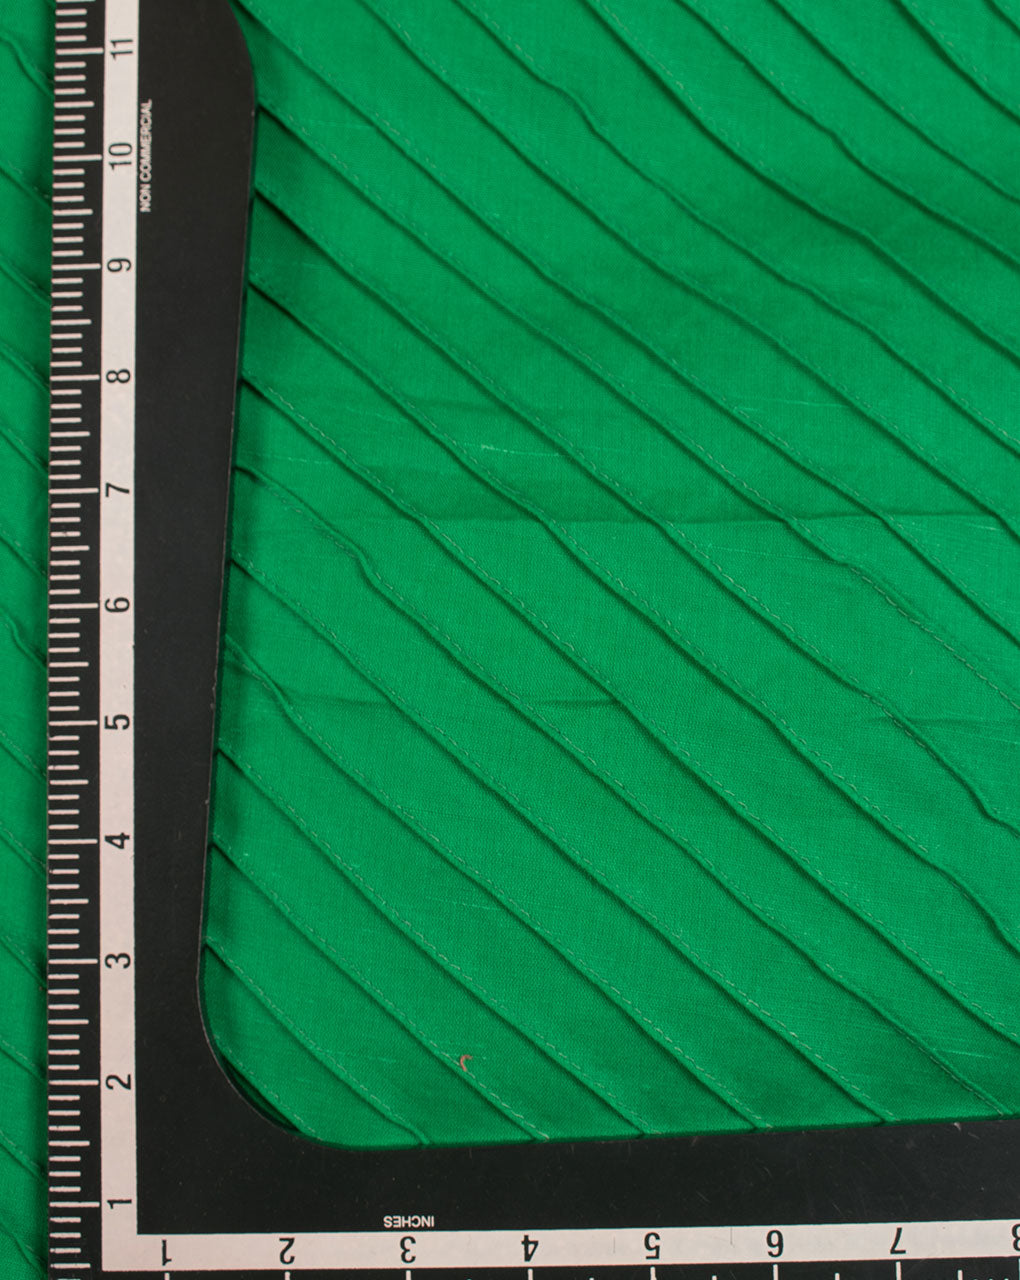 Green Pin-Tucks Flex Cotton Fabric - Fabriclore.com